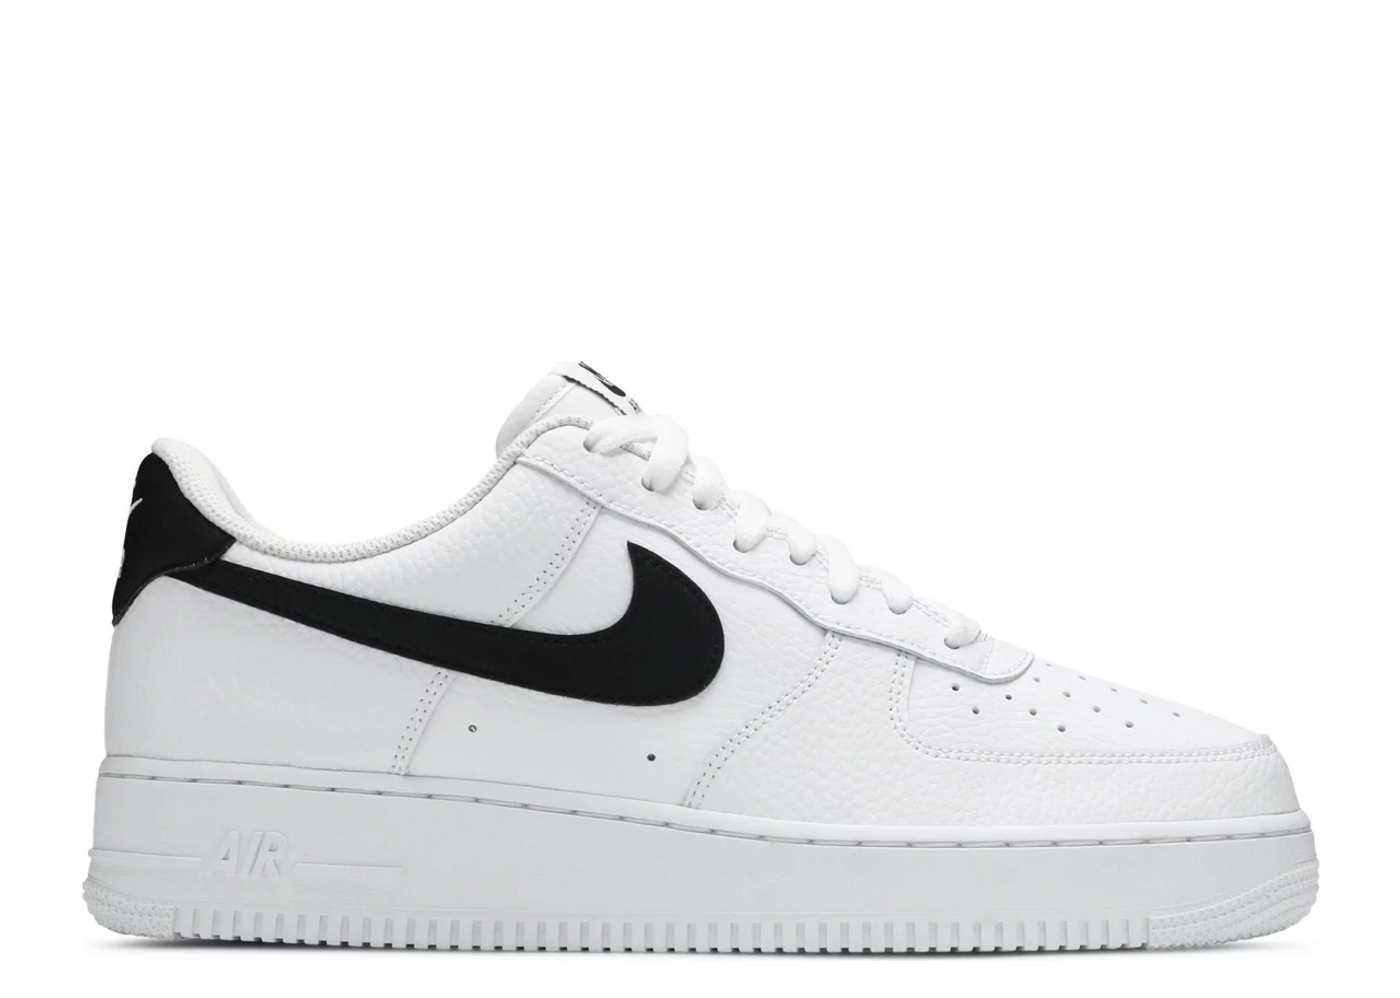 Nike Air Force 1 Low '07 White Black Pebbled Leather | Kick Avenue